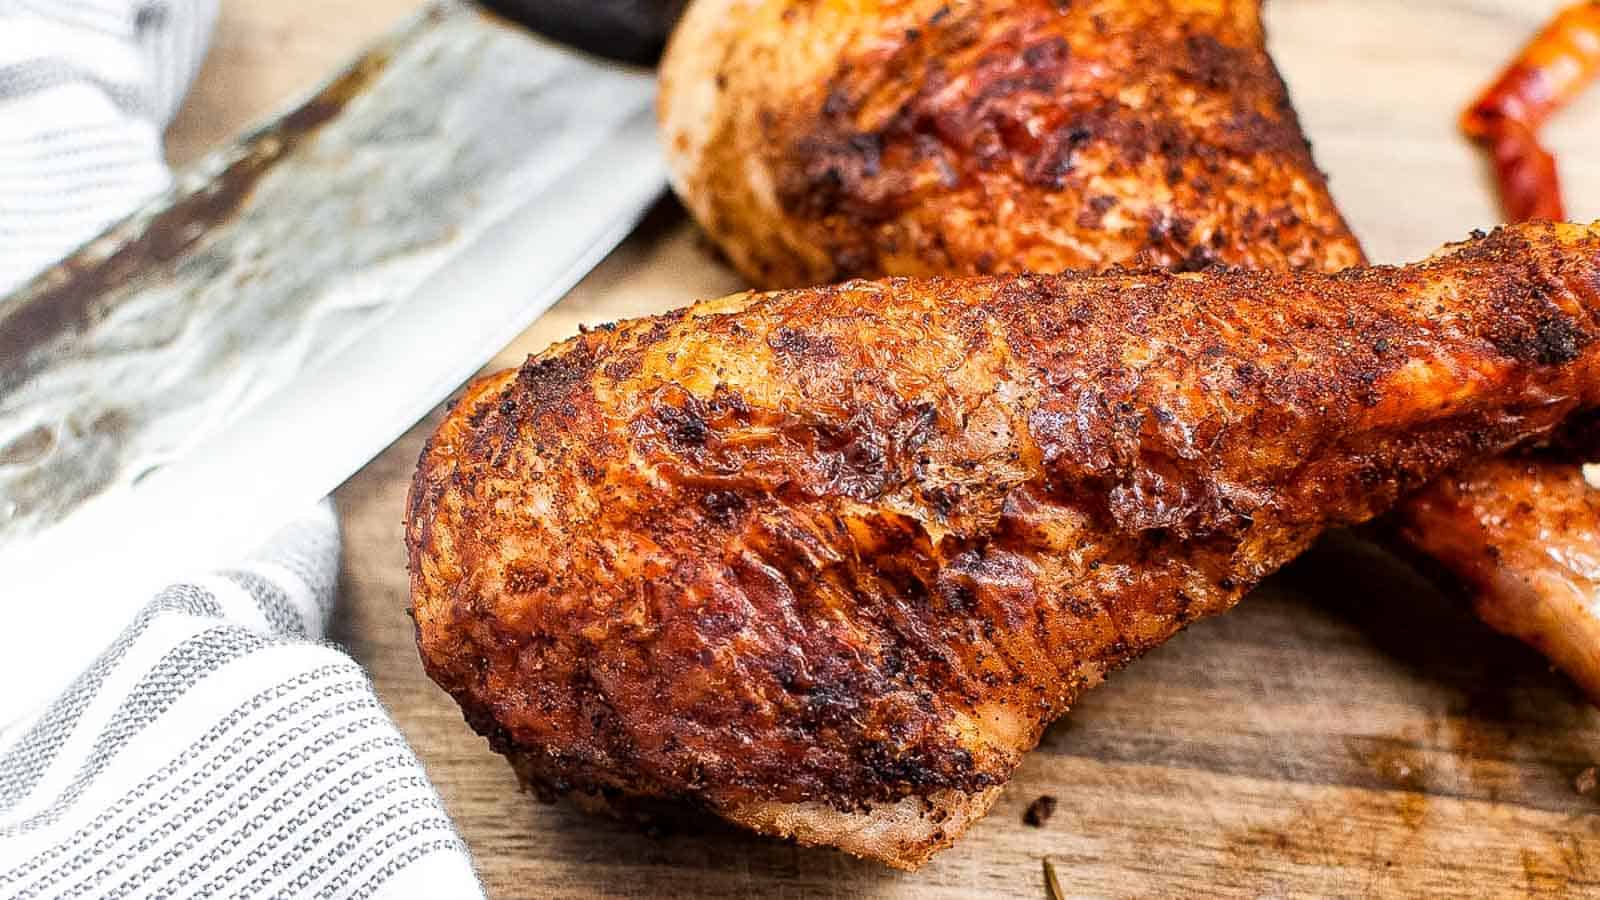 Roasted turkey legs on a cutting board with a knife.